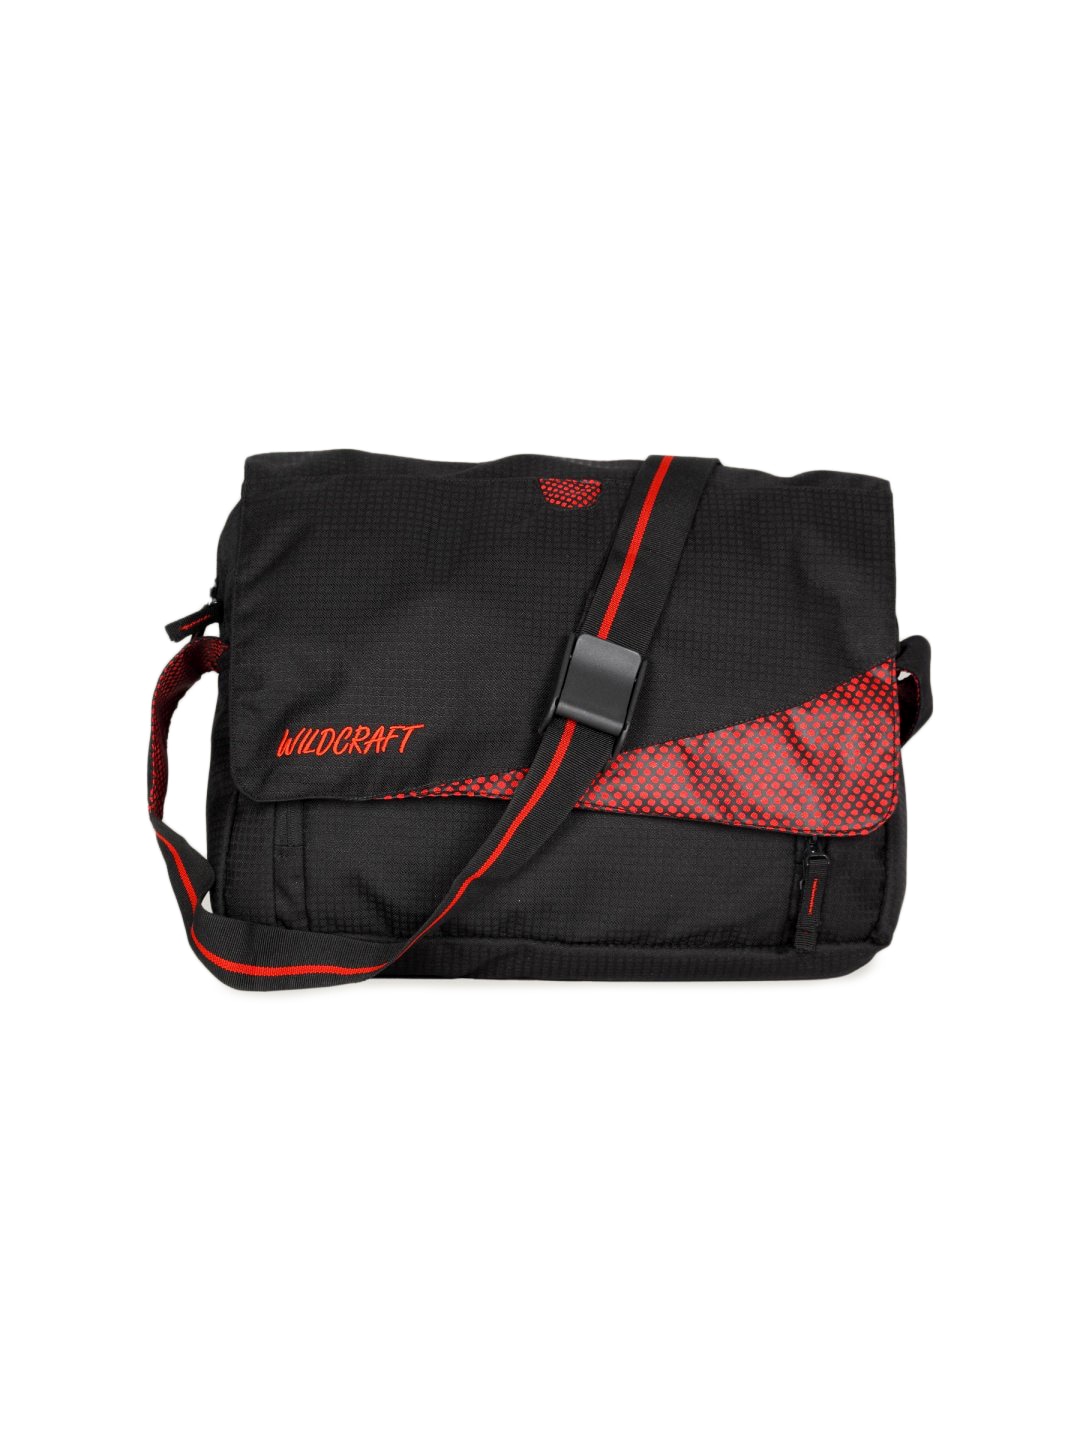 Wildcraft Unisex Black & Red Messenger Bag